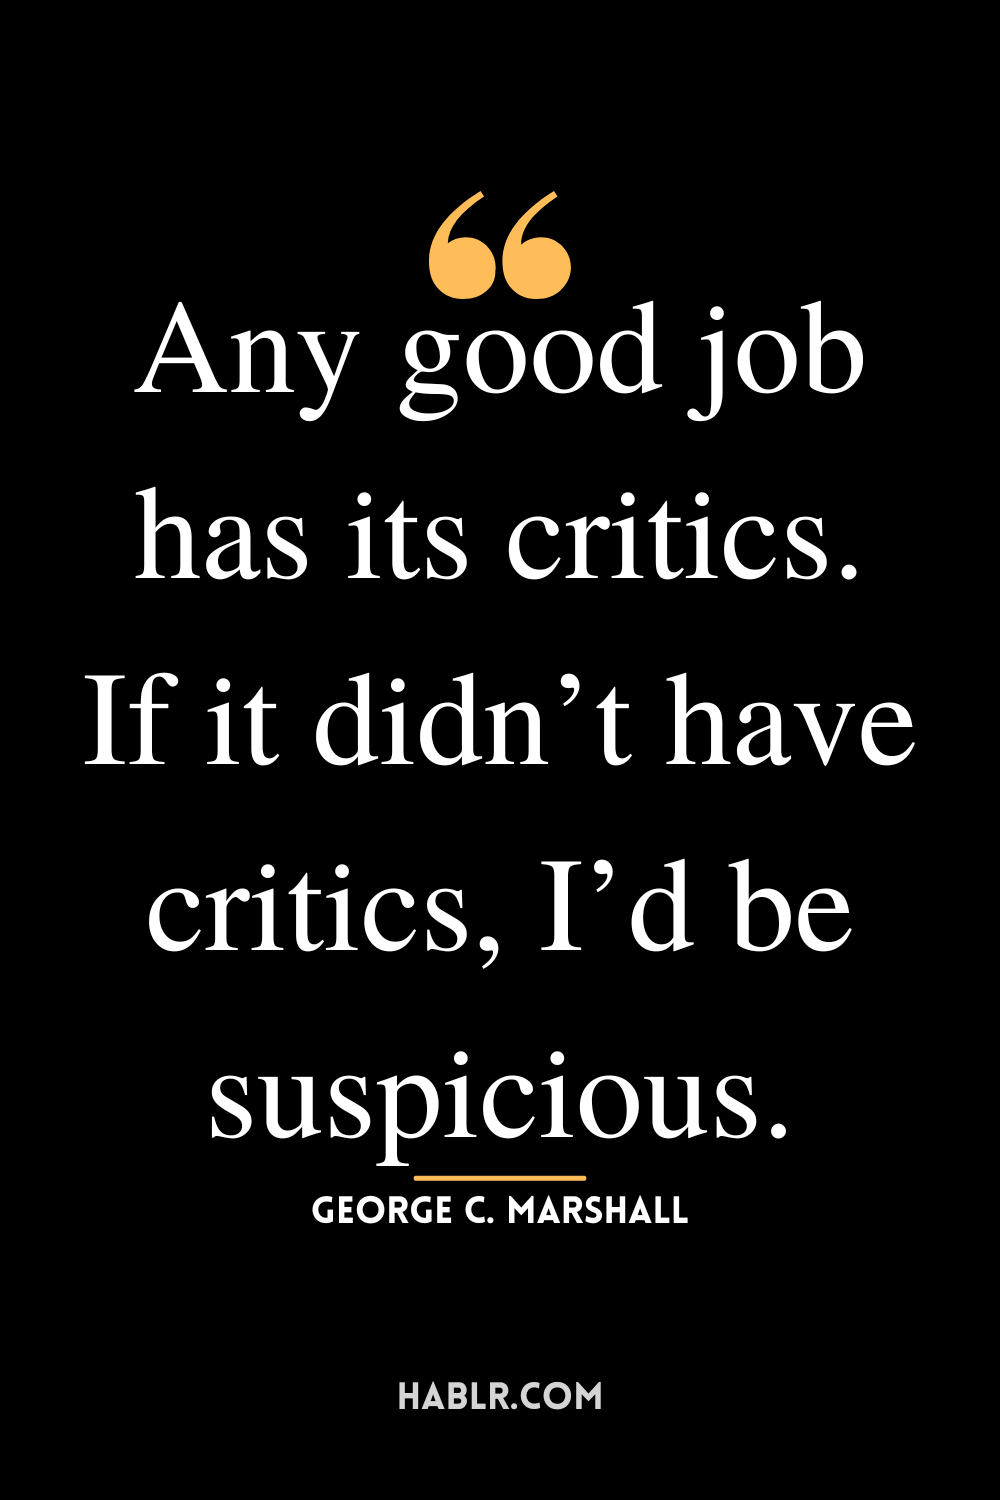 “Any good job has its critics. If it didn’t have critics, I’d be suspicious.” -George C. Marshall